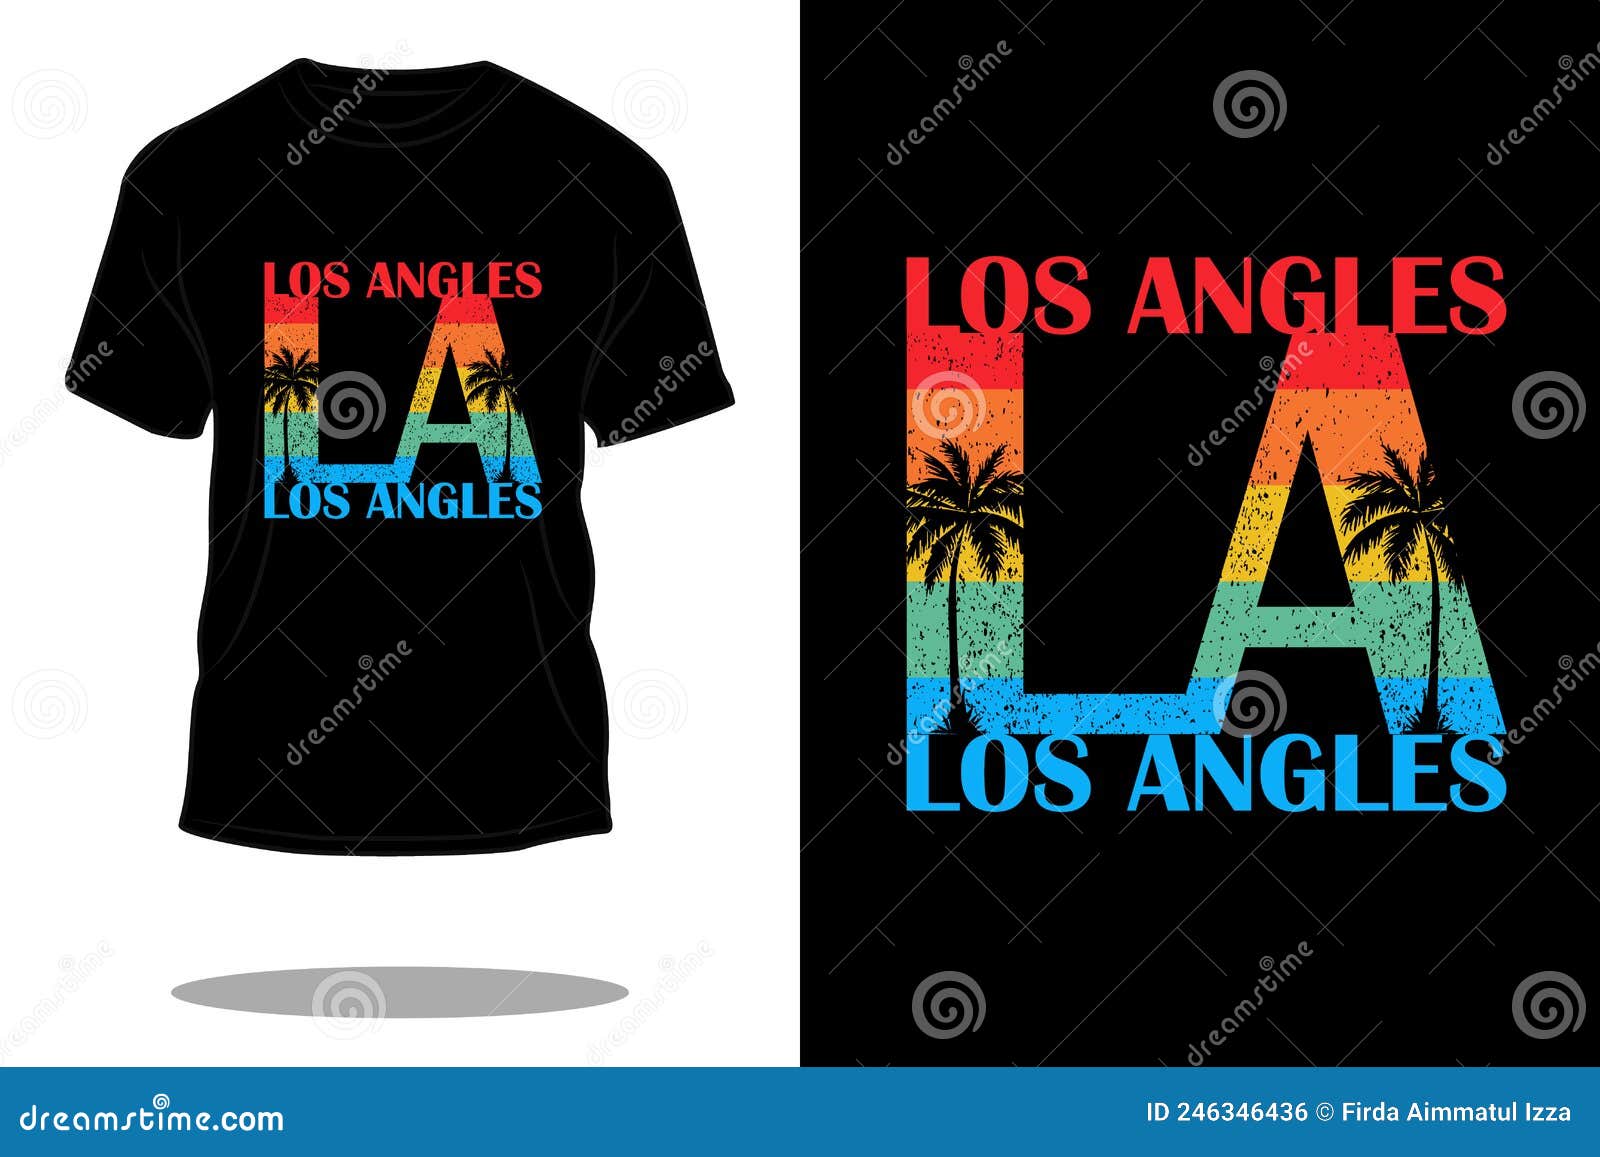 Los Angeles Retro T Shirt Design Stock Vector - Illustration of tree ...